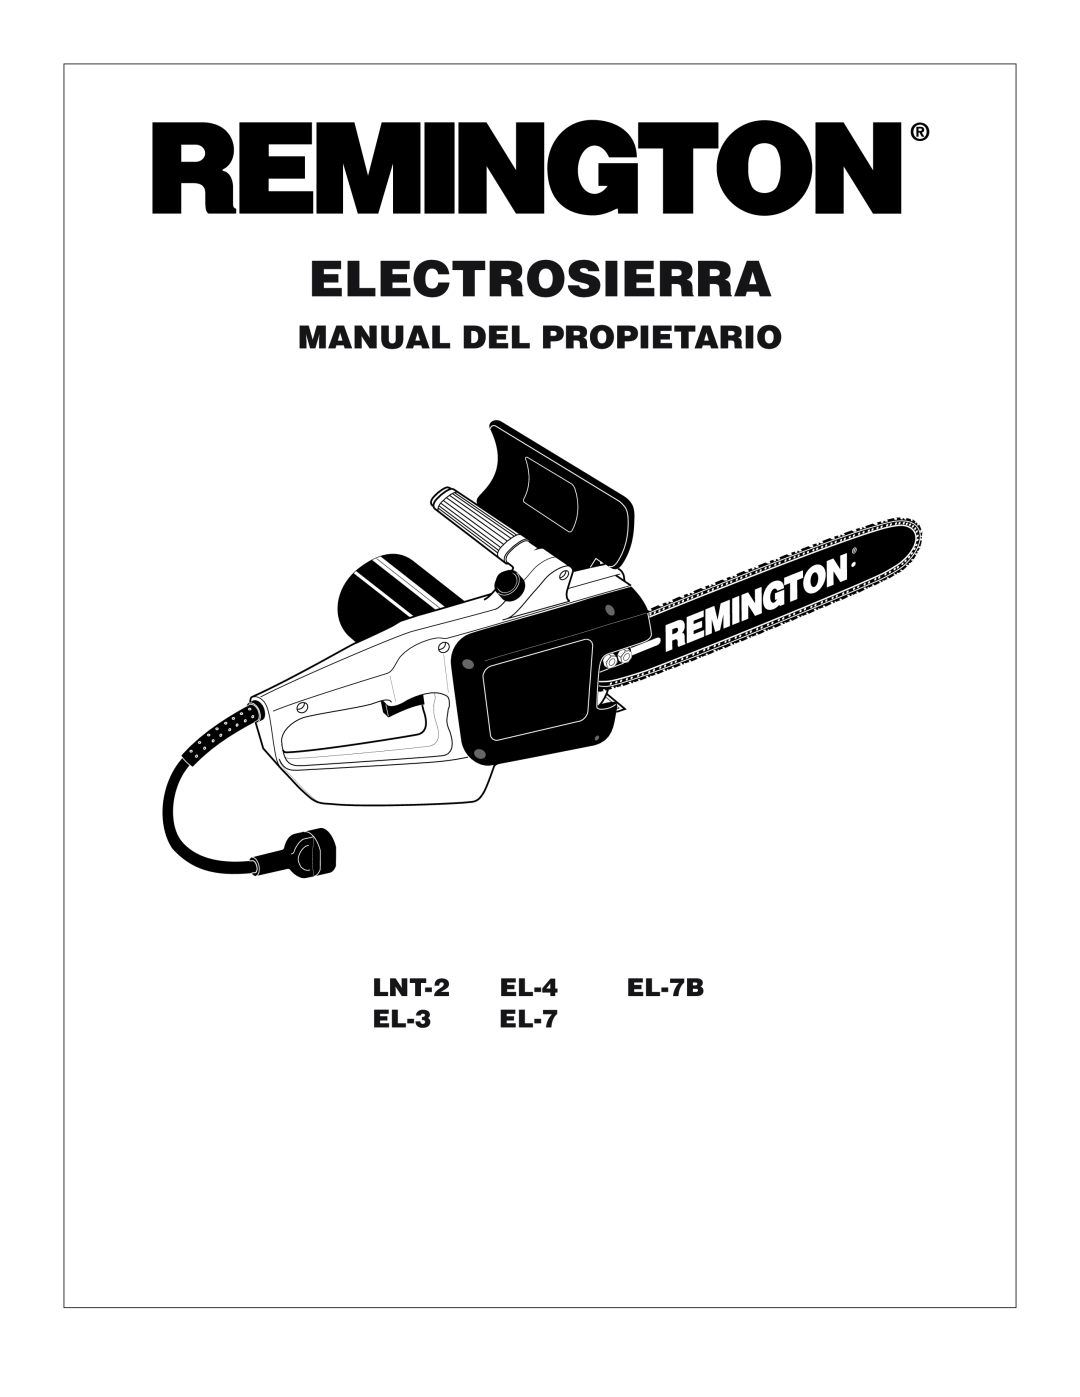 Remington Power Tools LNT-2, EL-4, EL-7B, EL-3, EL-7 Electrosierra, Manual Del Propietario, LNT-2 EL-4 EL-7B EL-3 EL-7 